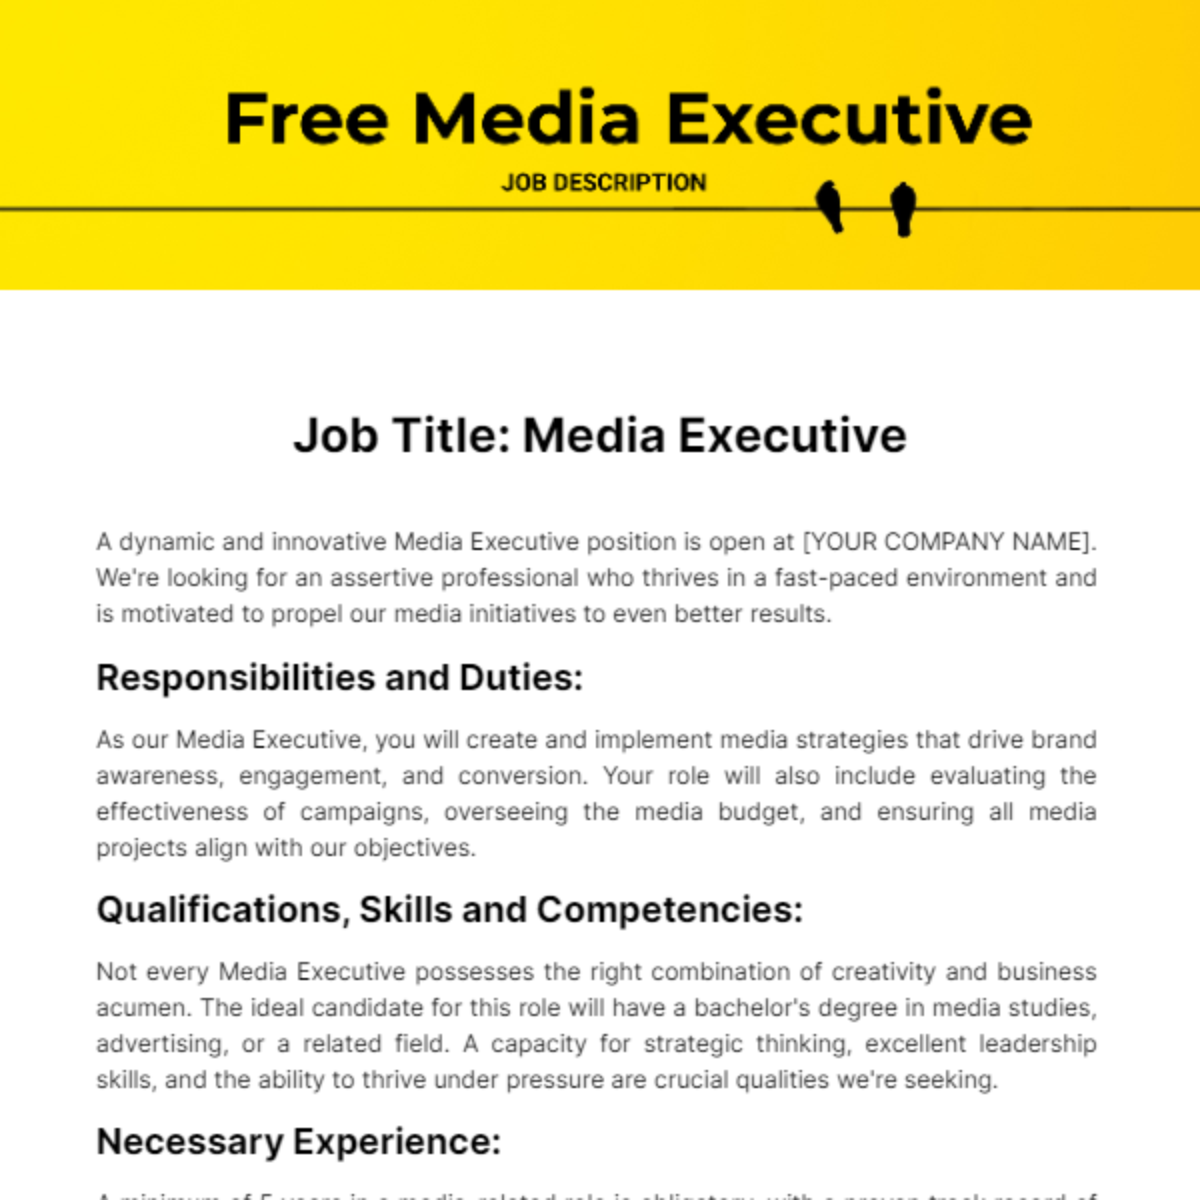 Free Media Executive Job Description Template